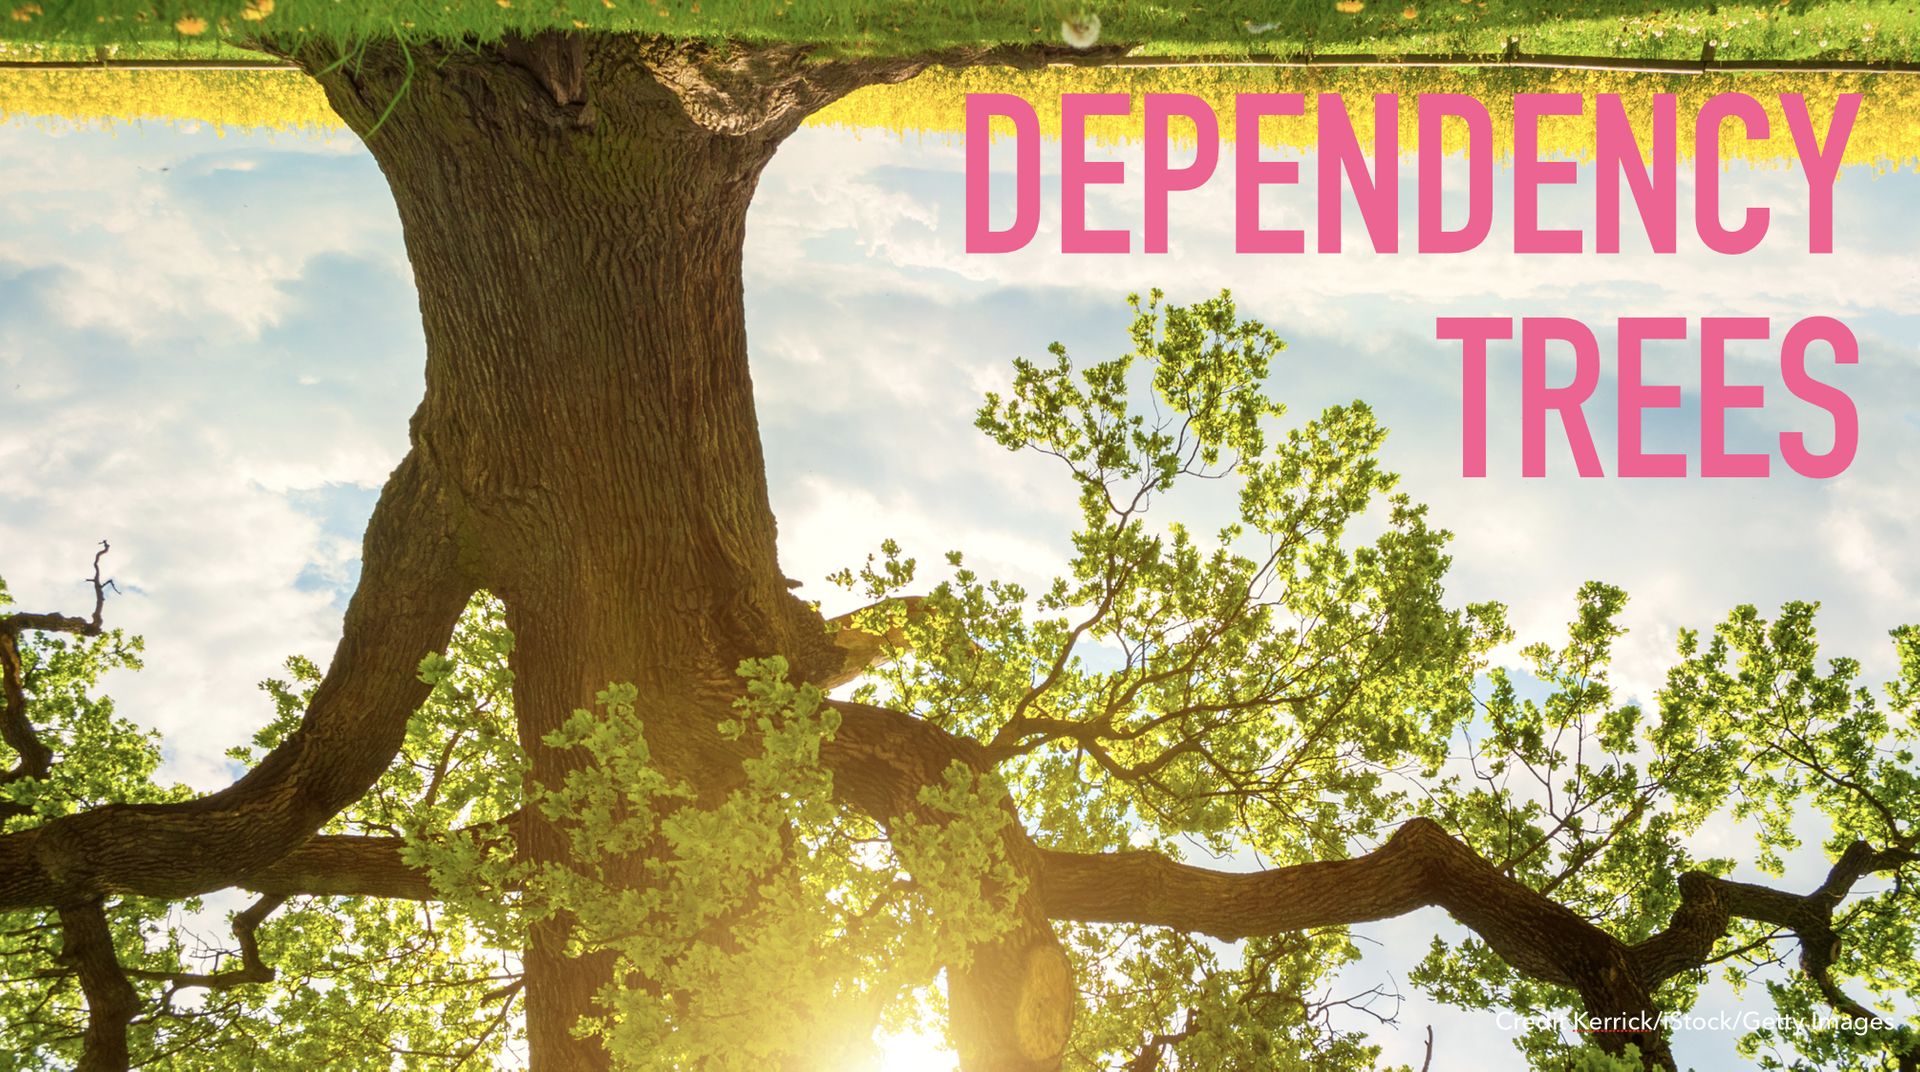 Slide text: Dependency trees